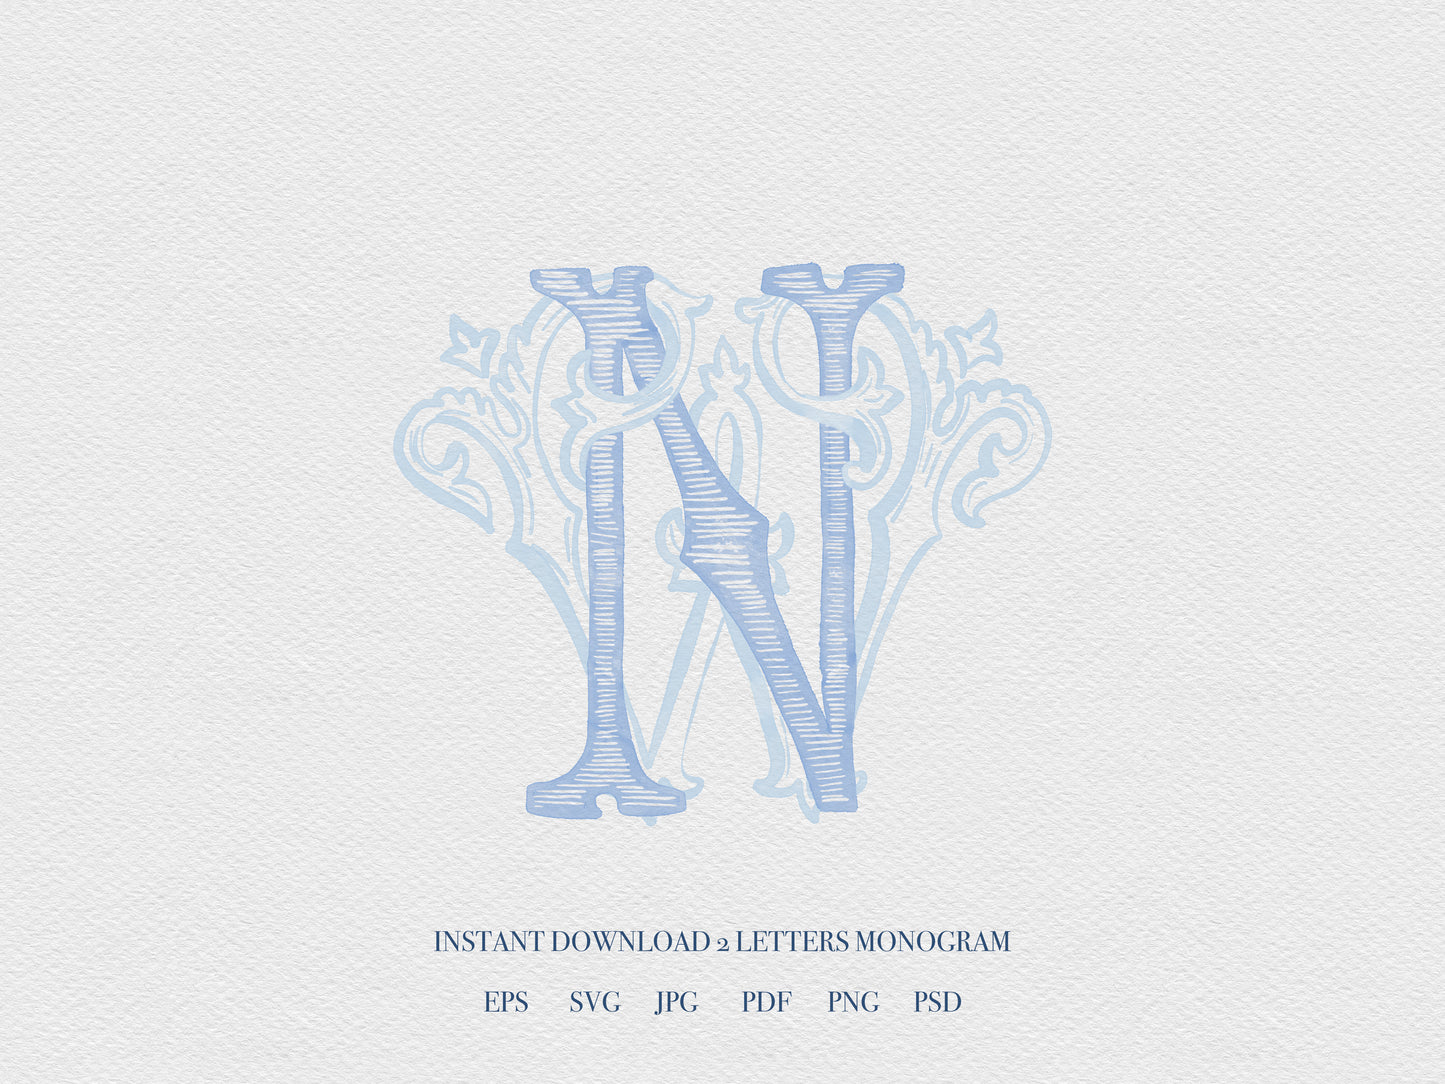 2 Letter Monogram with Letters NW WN | Digital Download - Wedding Monogram SVG, Personal Logo, Wedding Logo for Wedding Invitations The Wedding Crest Lab